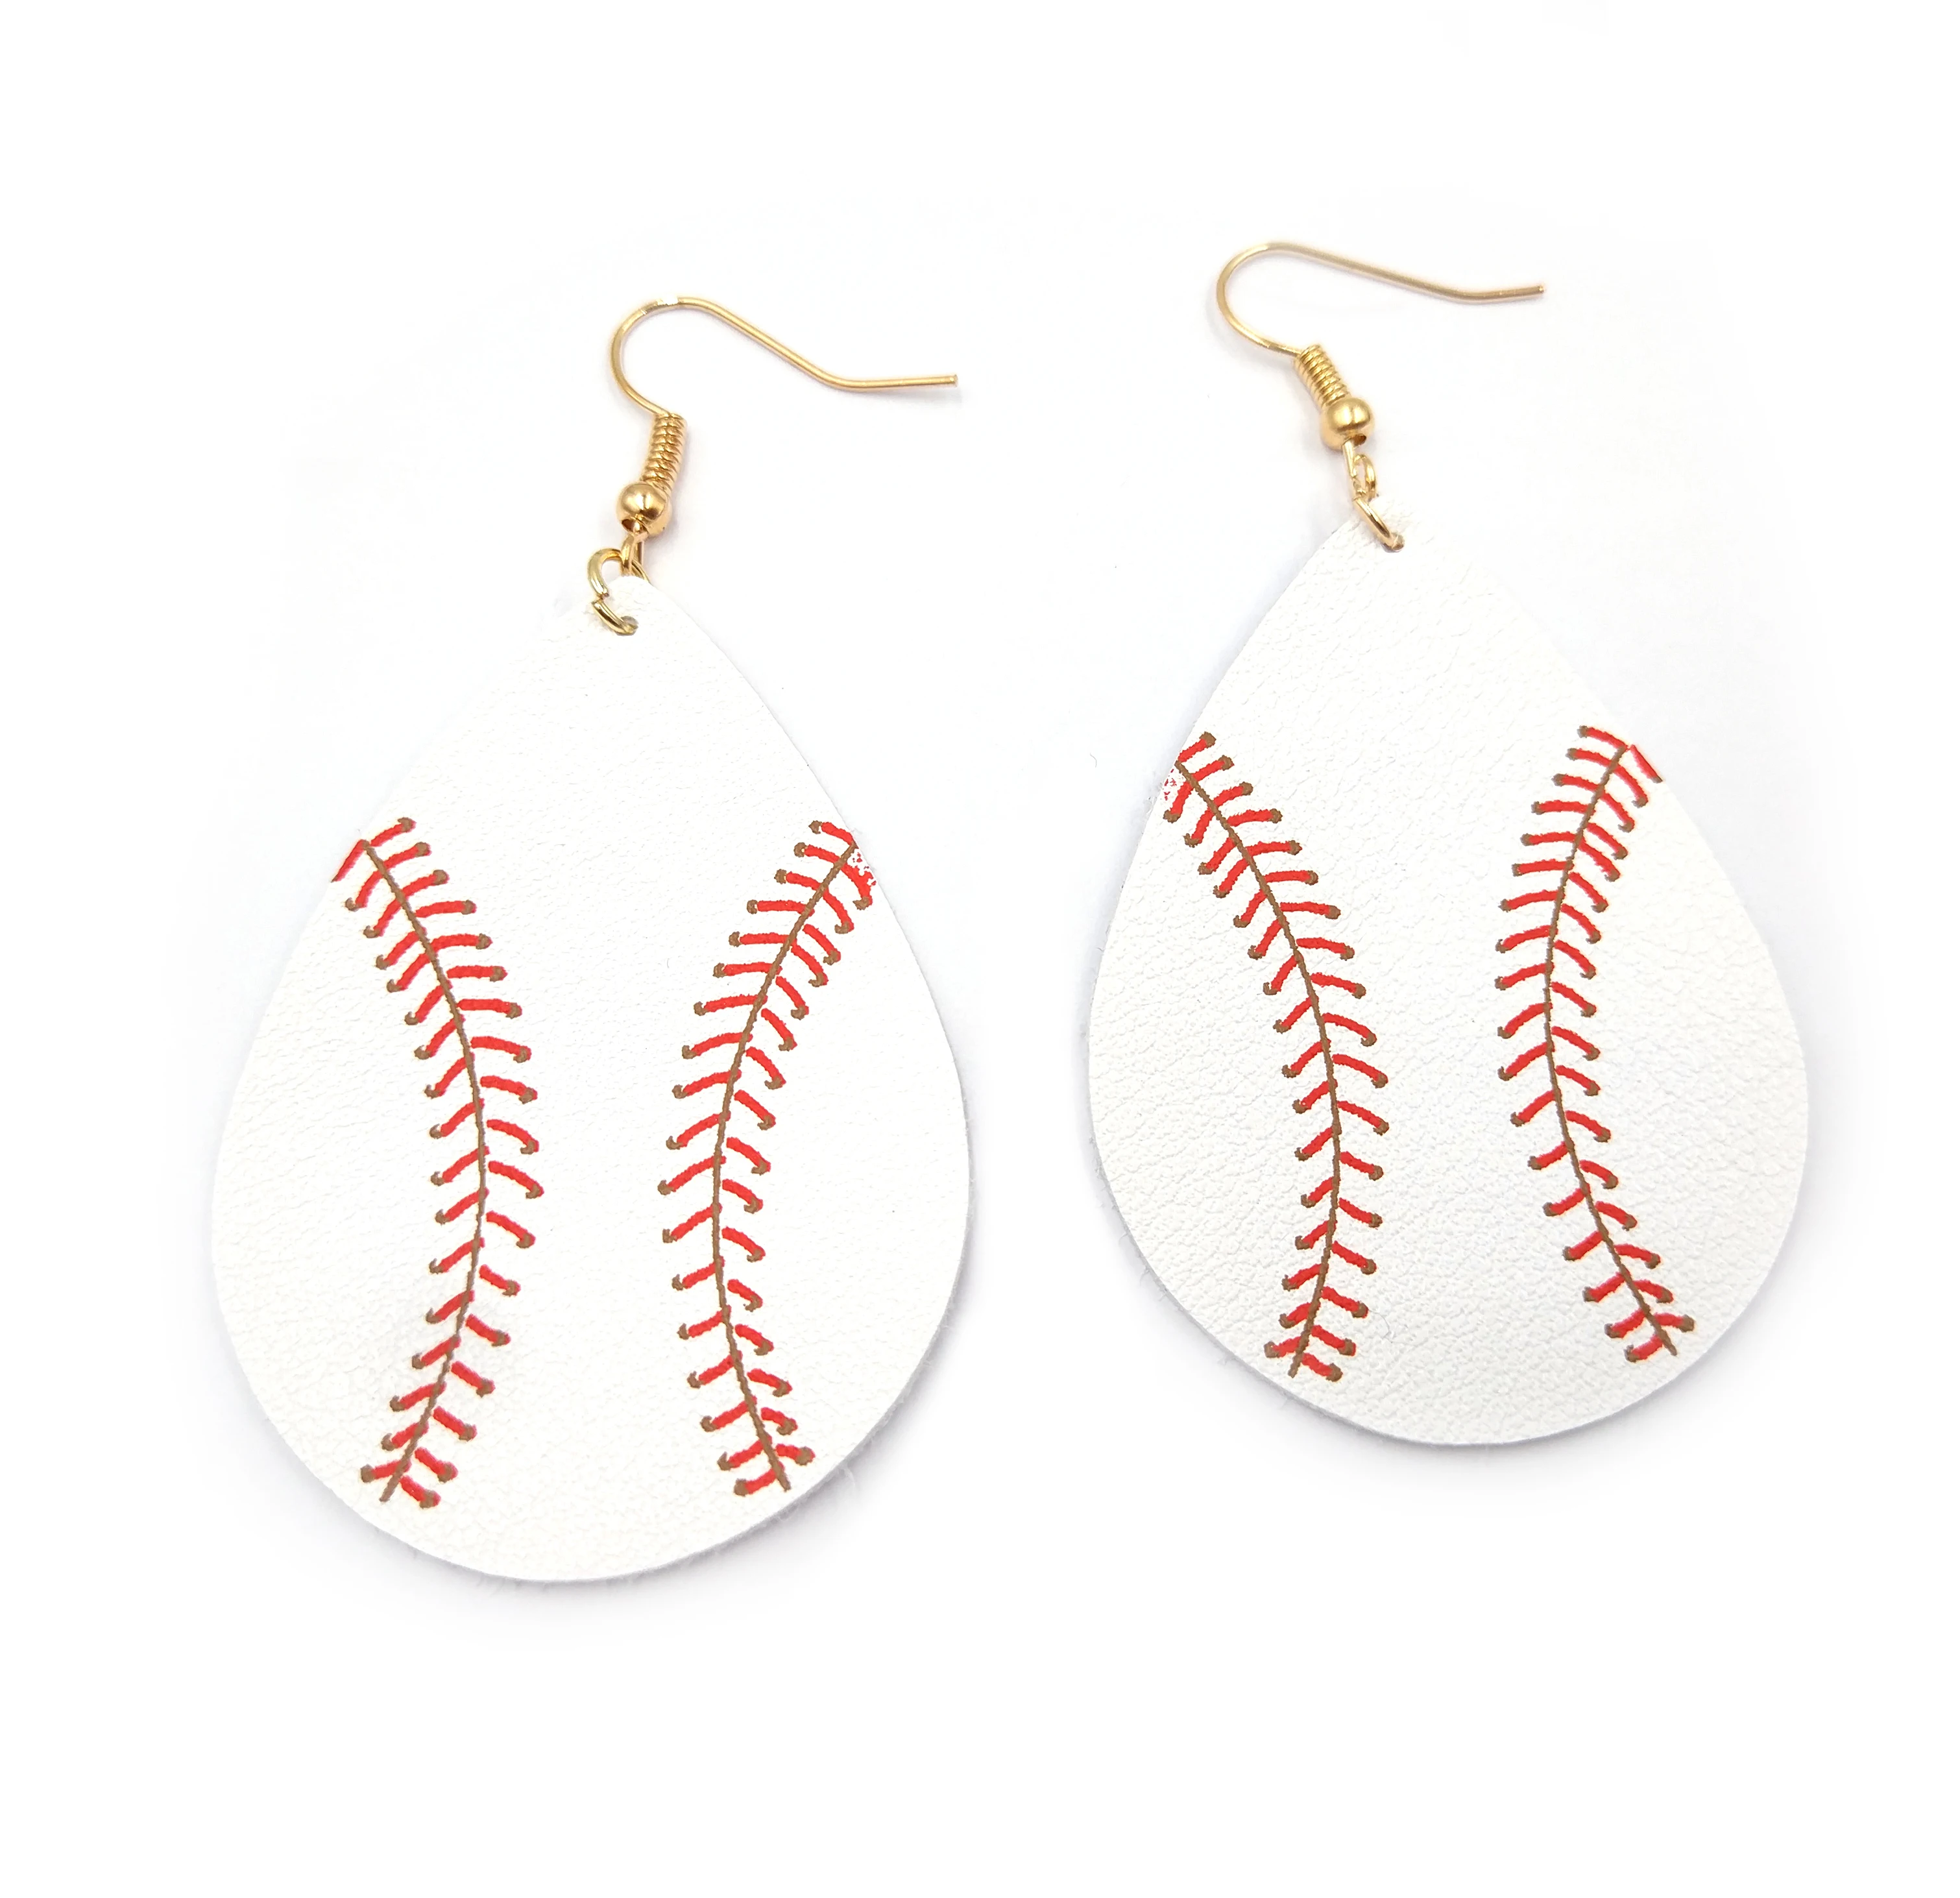 

2019 New Sports Jewelry Teardrop Genuine Leather Baseball Earrings peace olive branch Softball Leather Earrings for Women